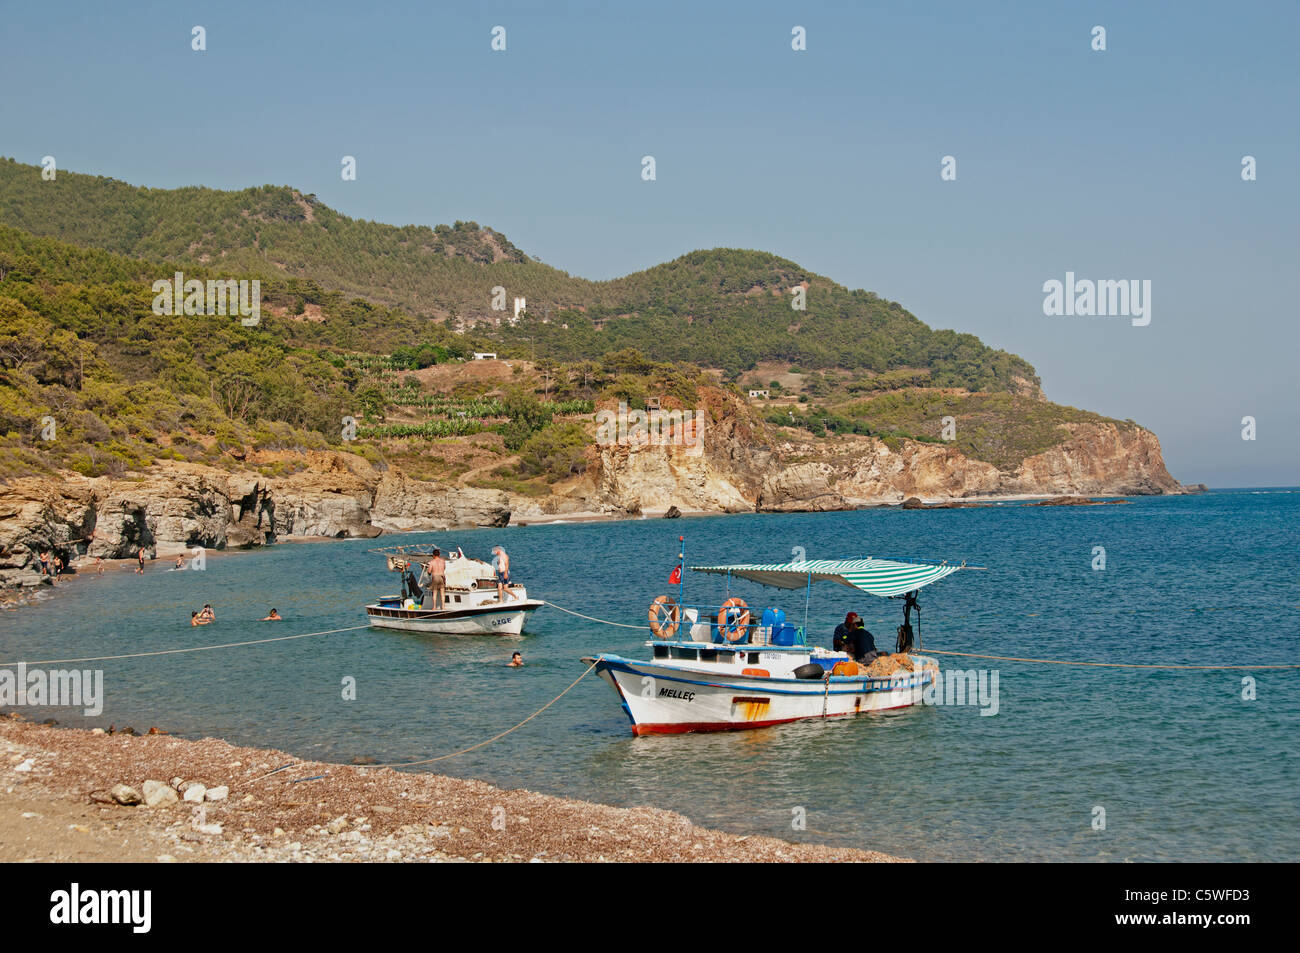 Plage de la côte sud de la Turquie, sur la mer du littoral entre Antalya Alanya Banque D'Images